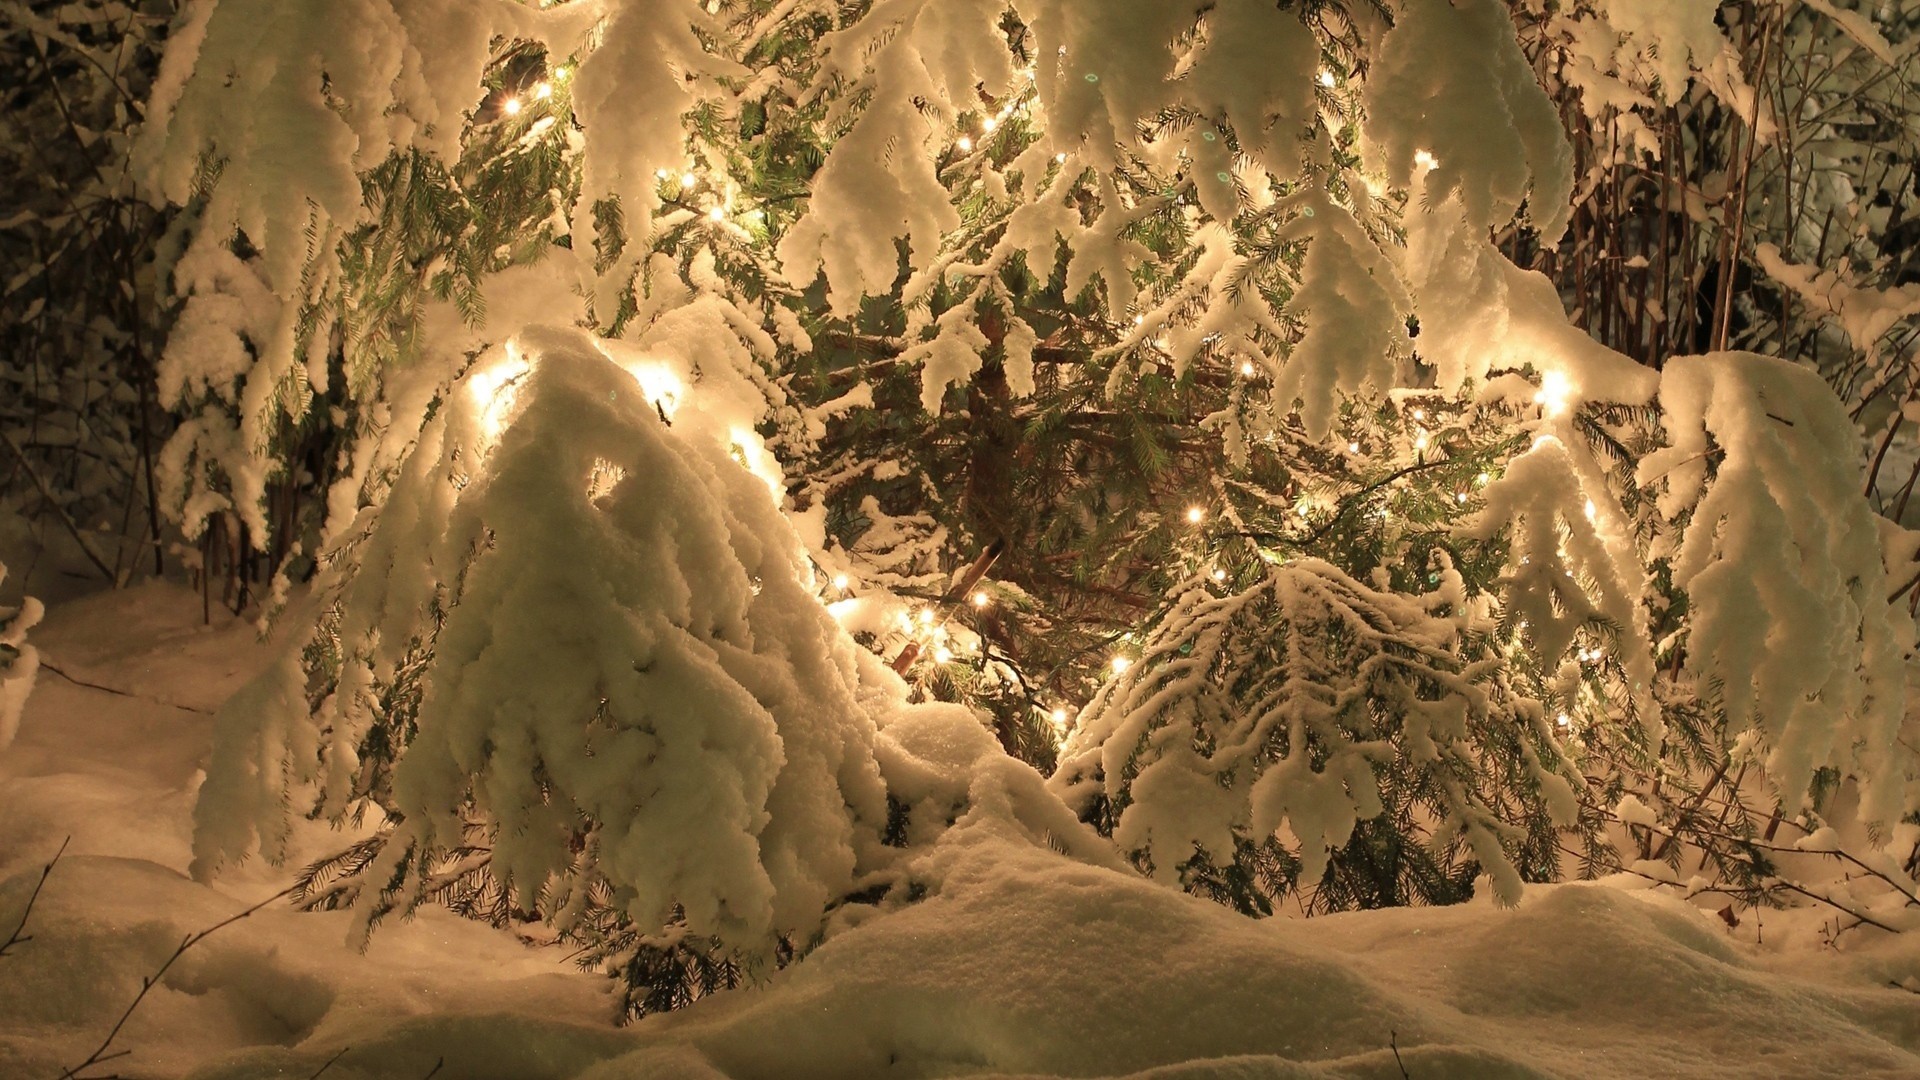 1920x1080 Nature trees winter snow seasons lights christmas cold wallpaper |   | 26612 | WallpaperUP